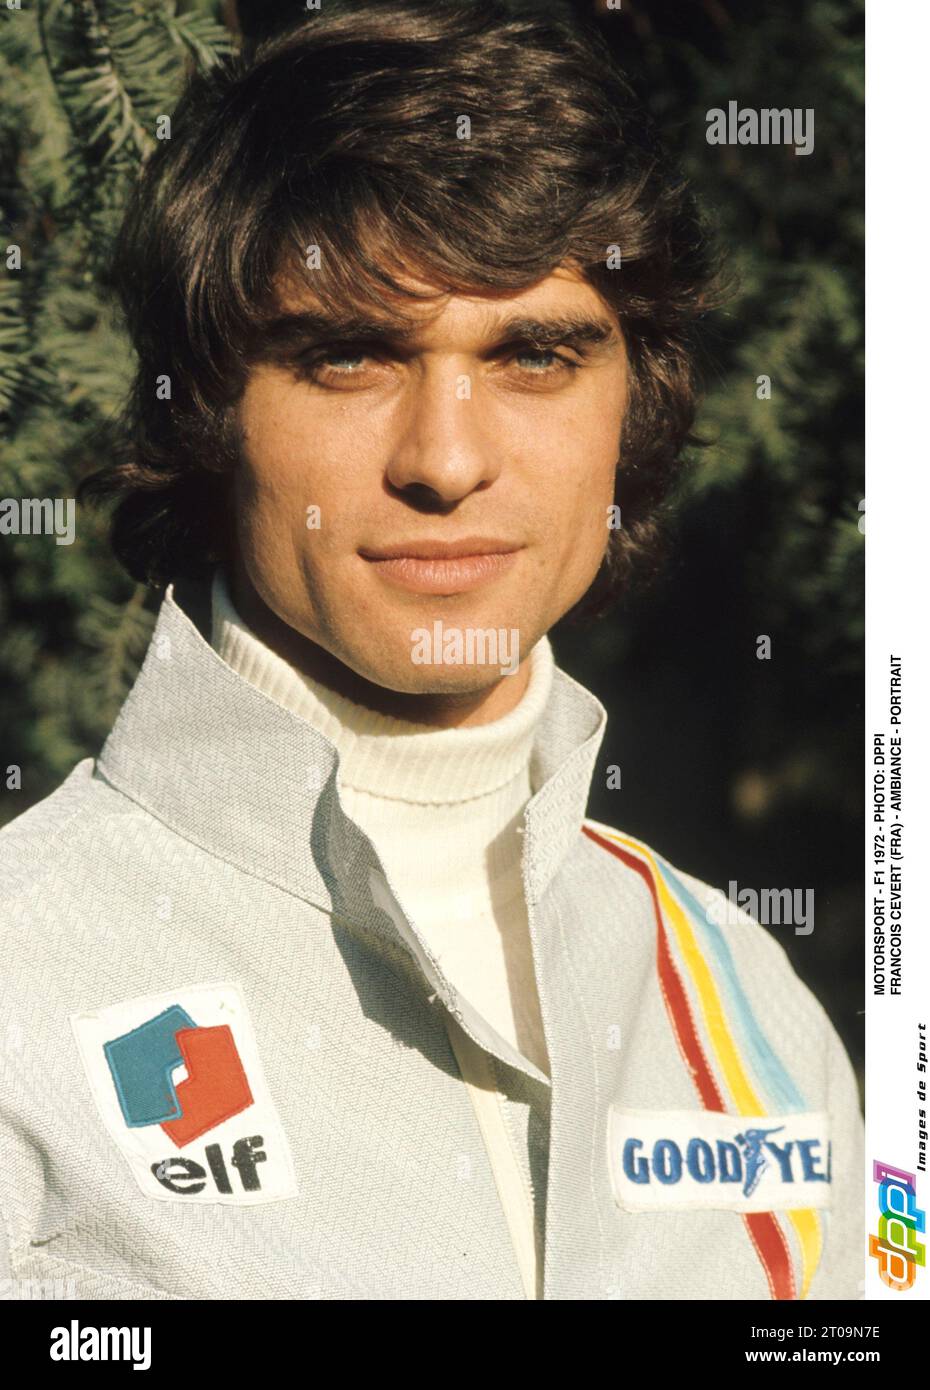 MOTORSPORT - F1 1972 - PHOTO: DPPI FRANCOIS CEVERT (FRA) - AMBIANCE - PORTRAIT Stock Photo